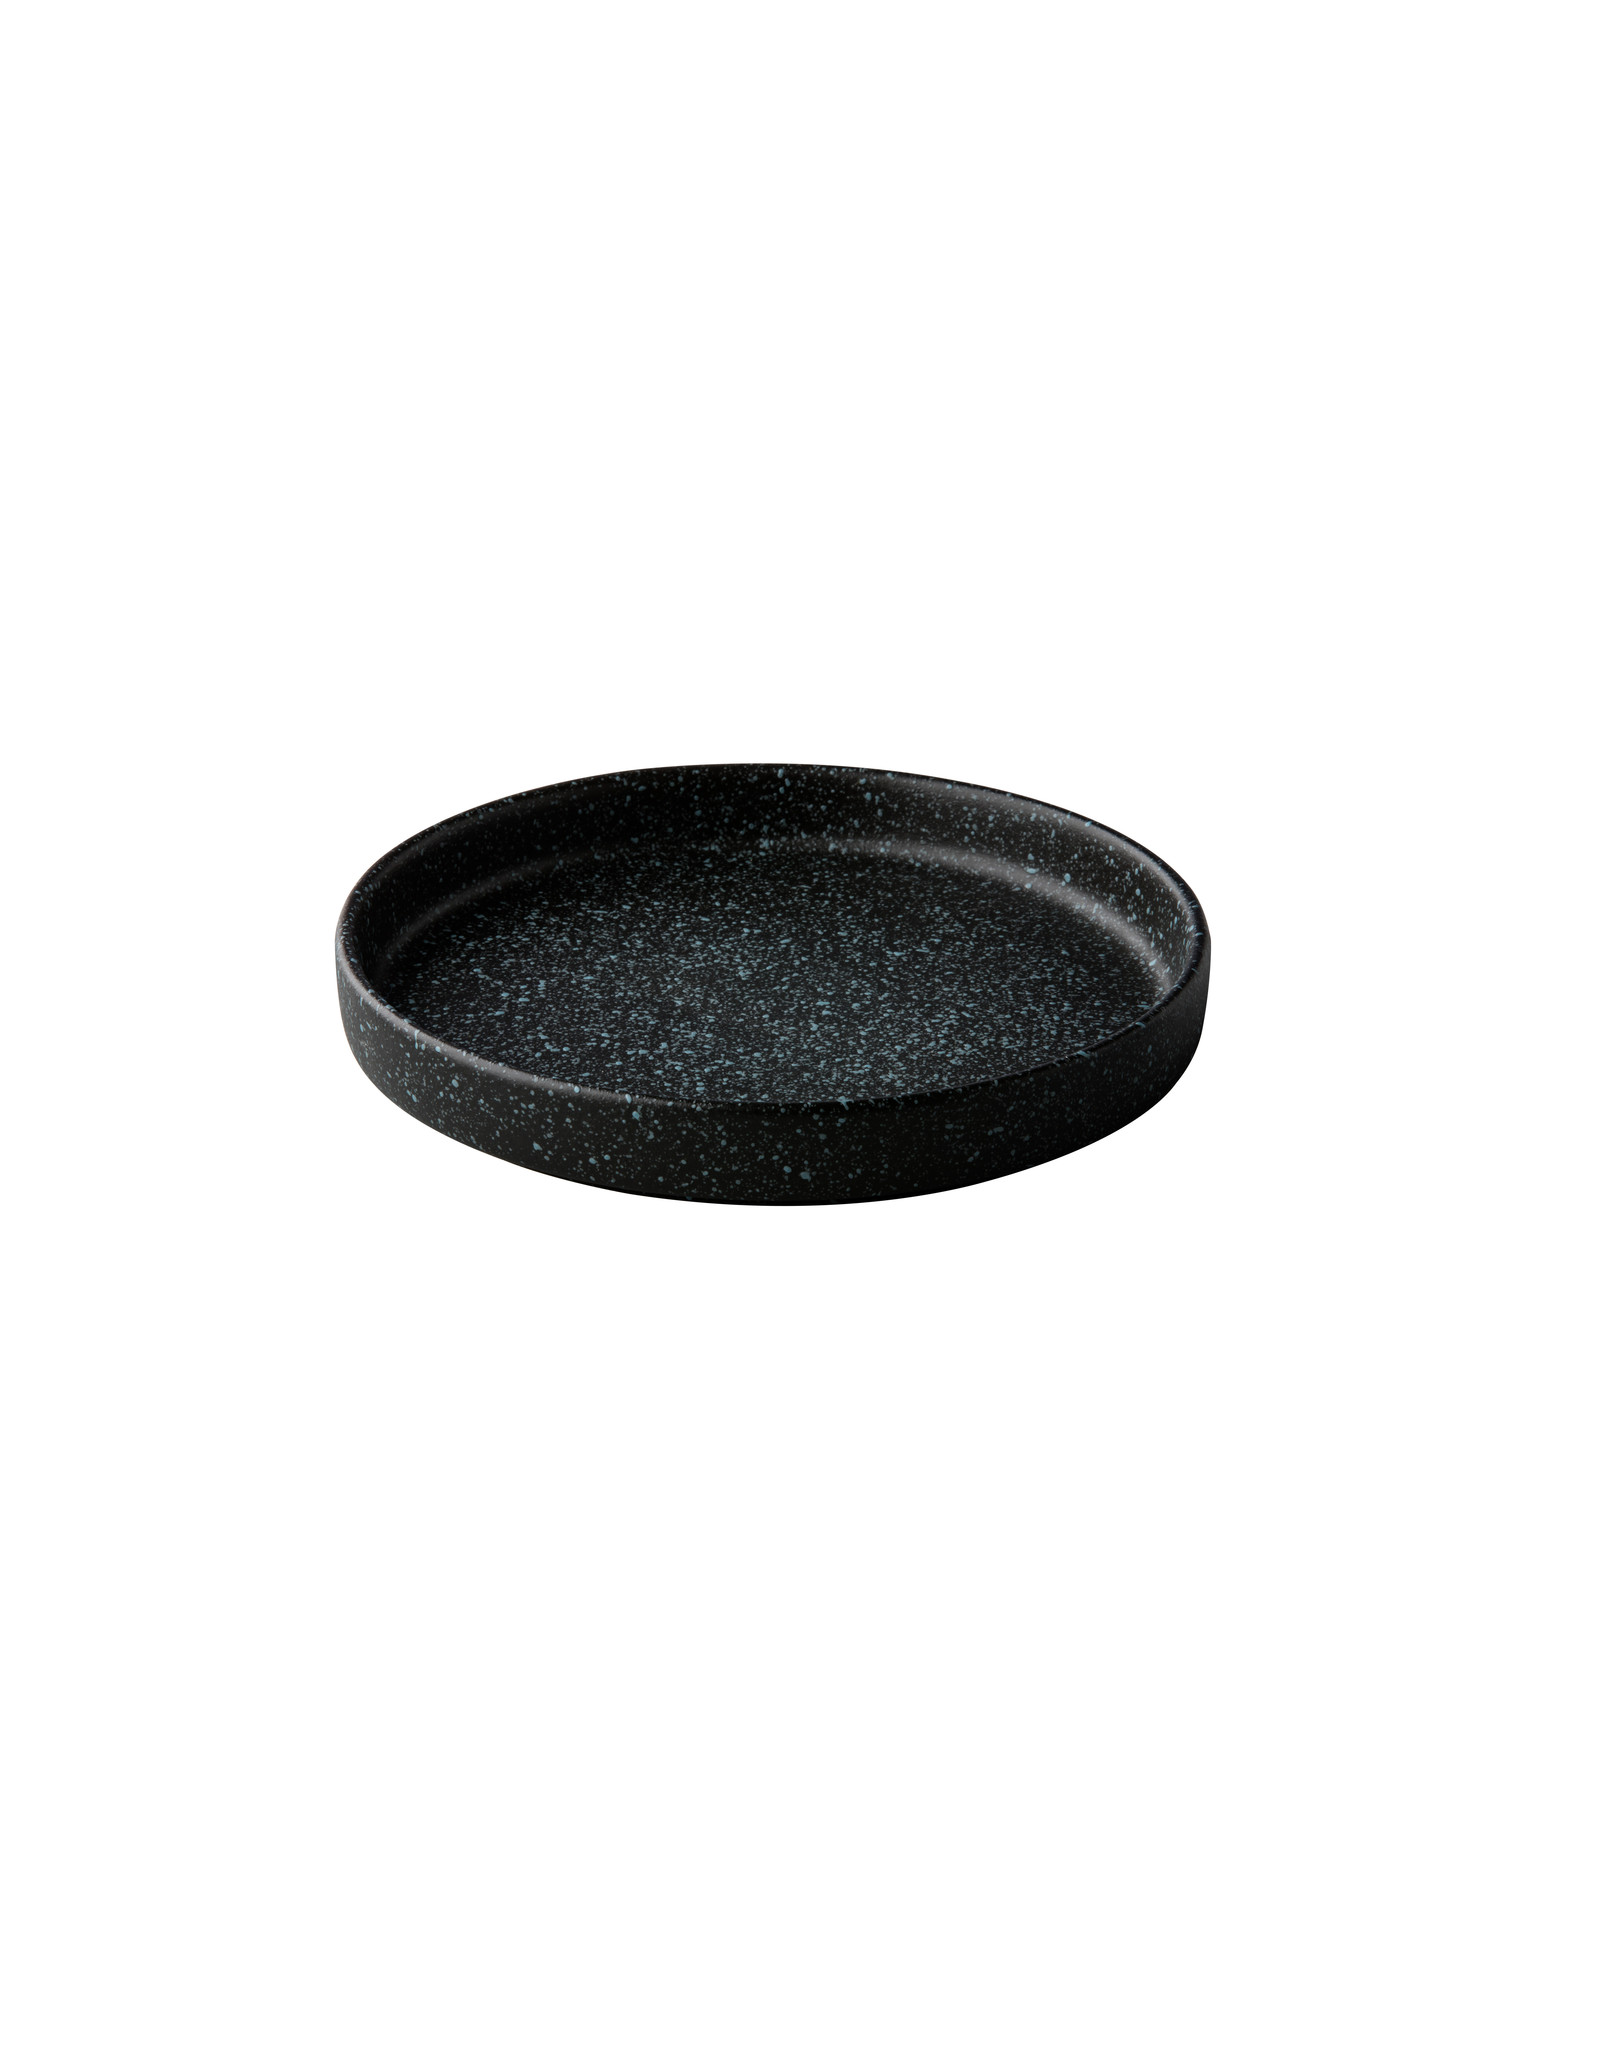 Stylepoint Bristol plate raised edge black with blue spots 17cm